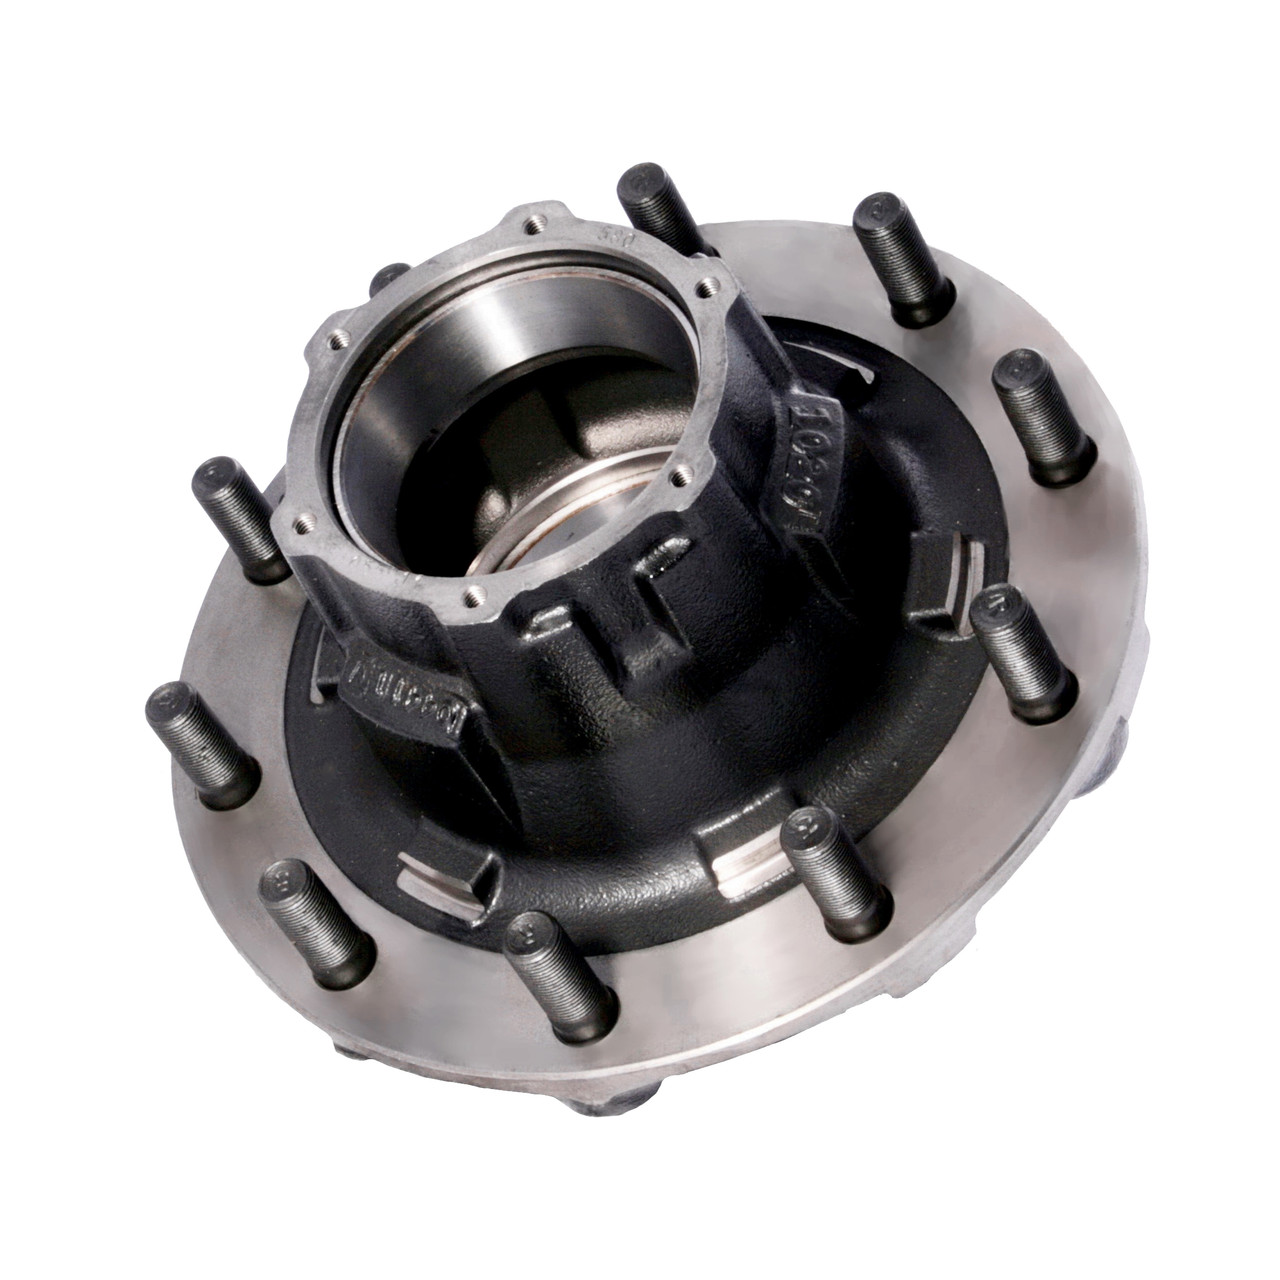 Ring, Aluminum, 1/16”, Mill Finish, Size: outer radius= 6.0”, inner radius  2.0”